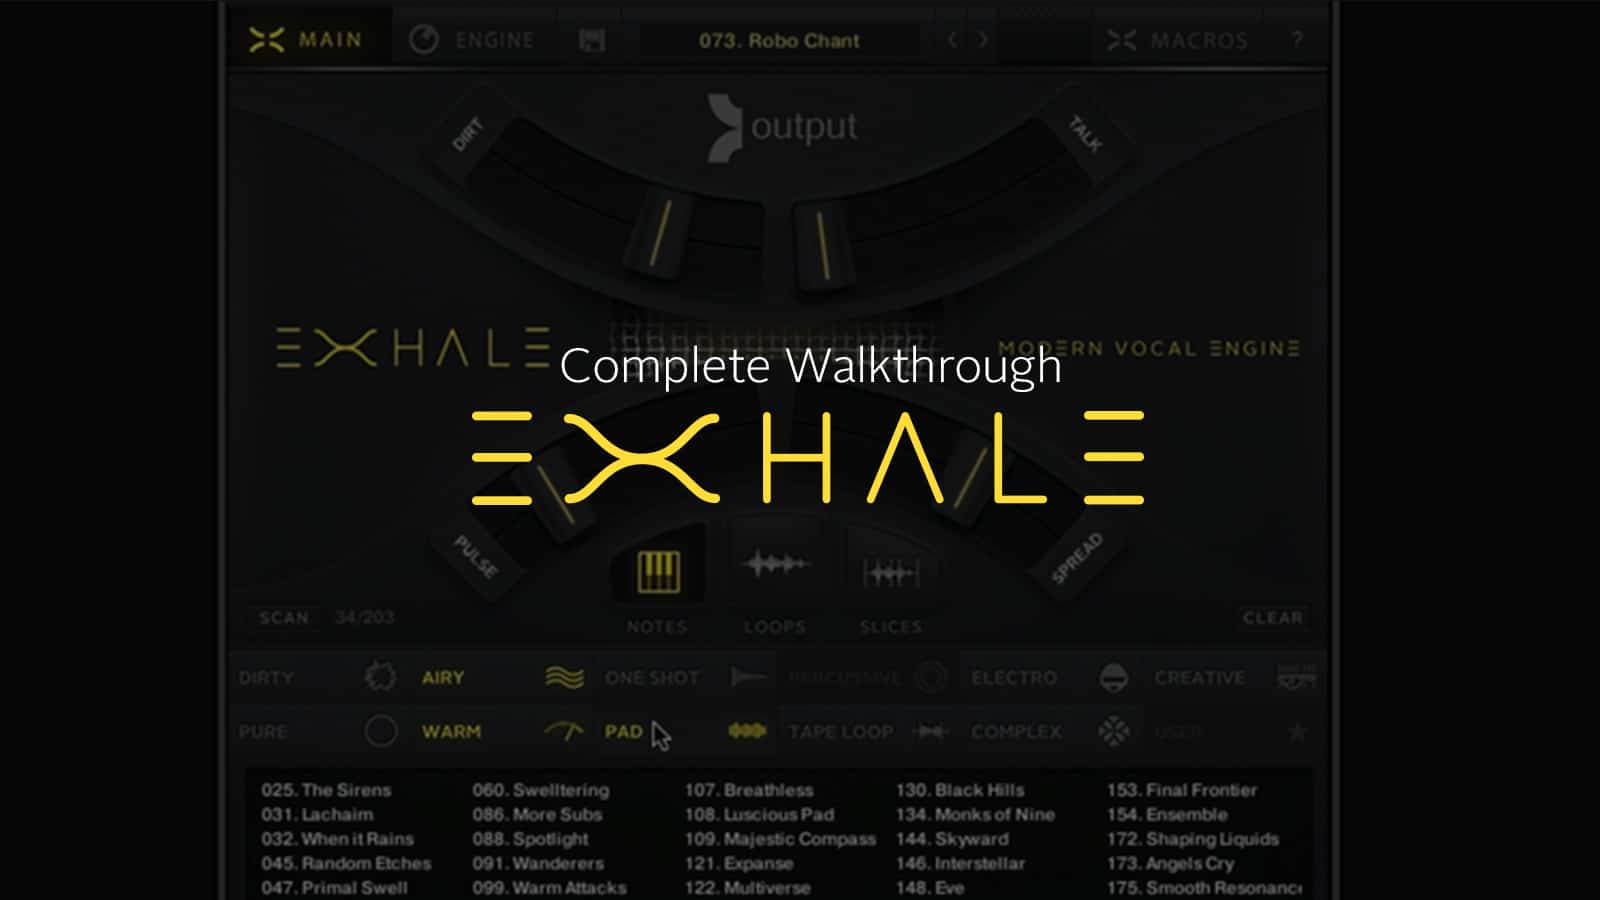 EXHALE walkthrough video